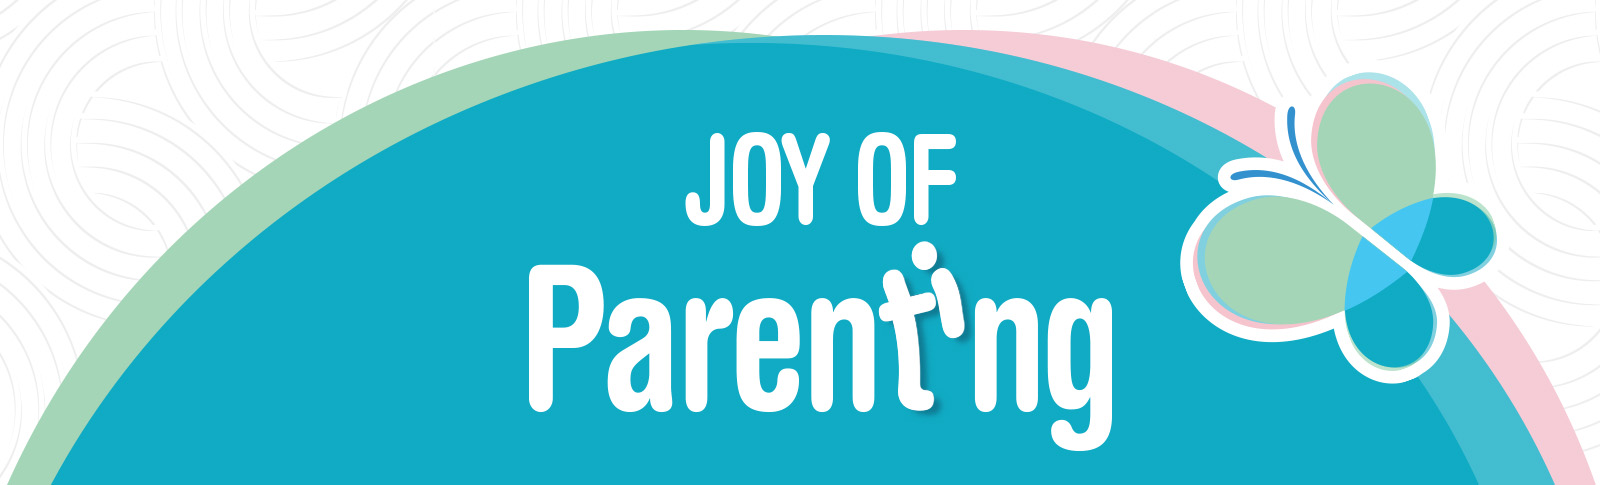 Joy of parenting banner2